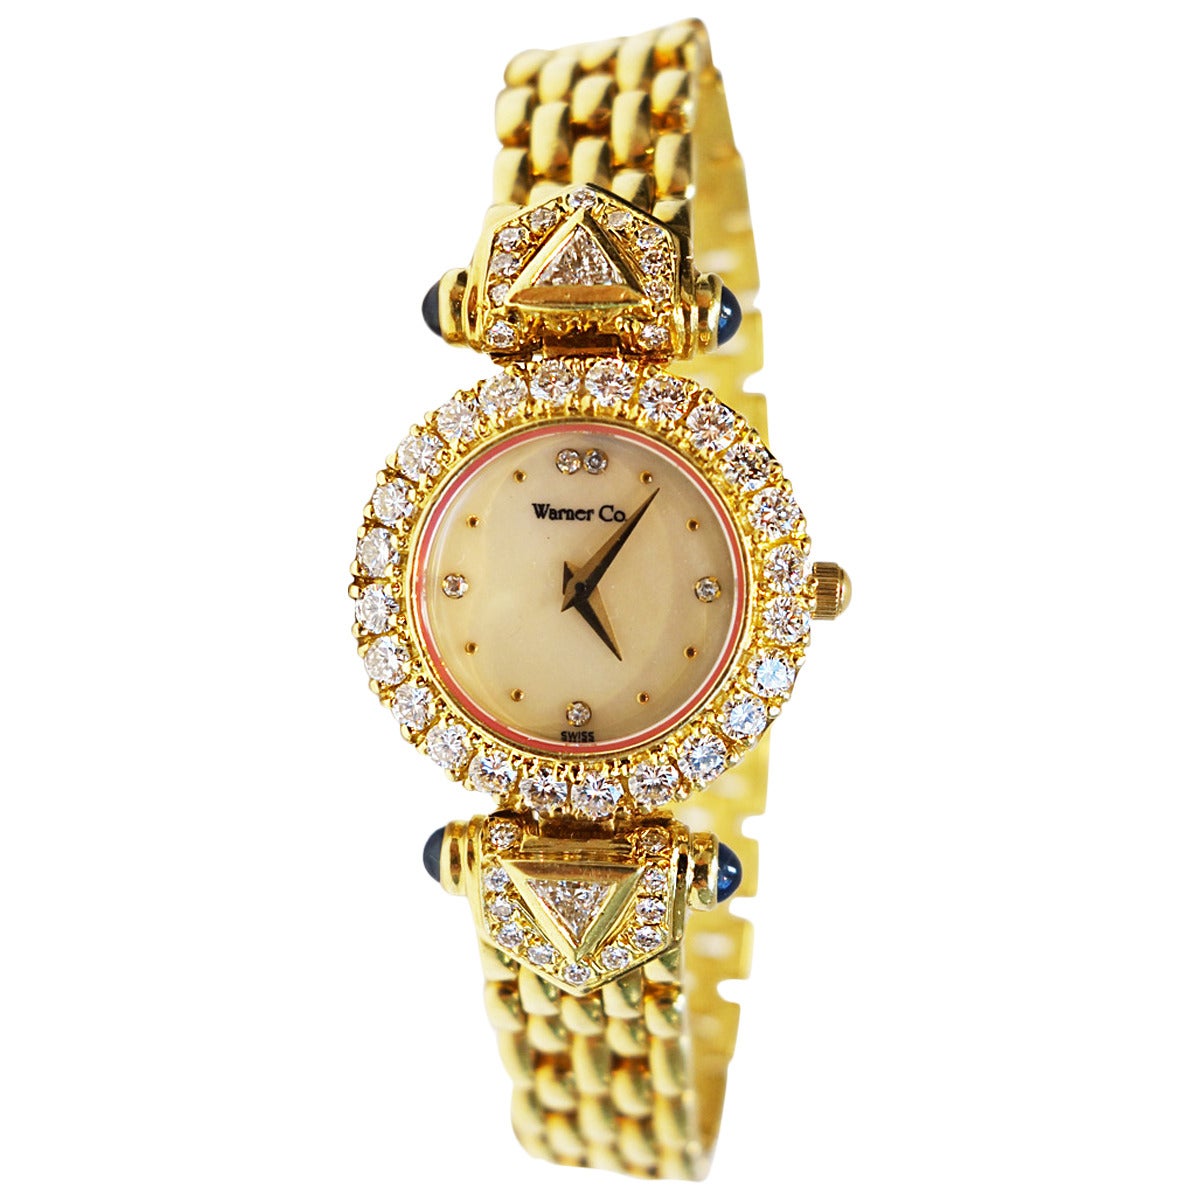 Warner & Co. Ladies Yellow Gold Diamond Quartz Wristwatch